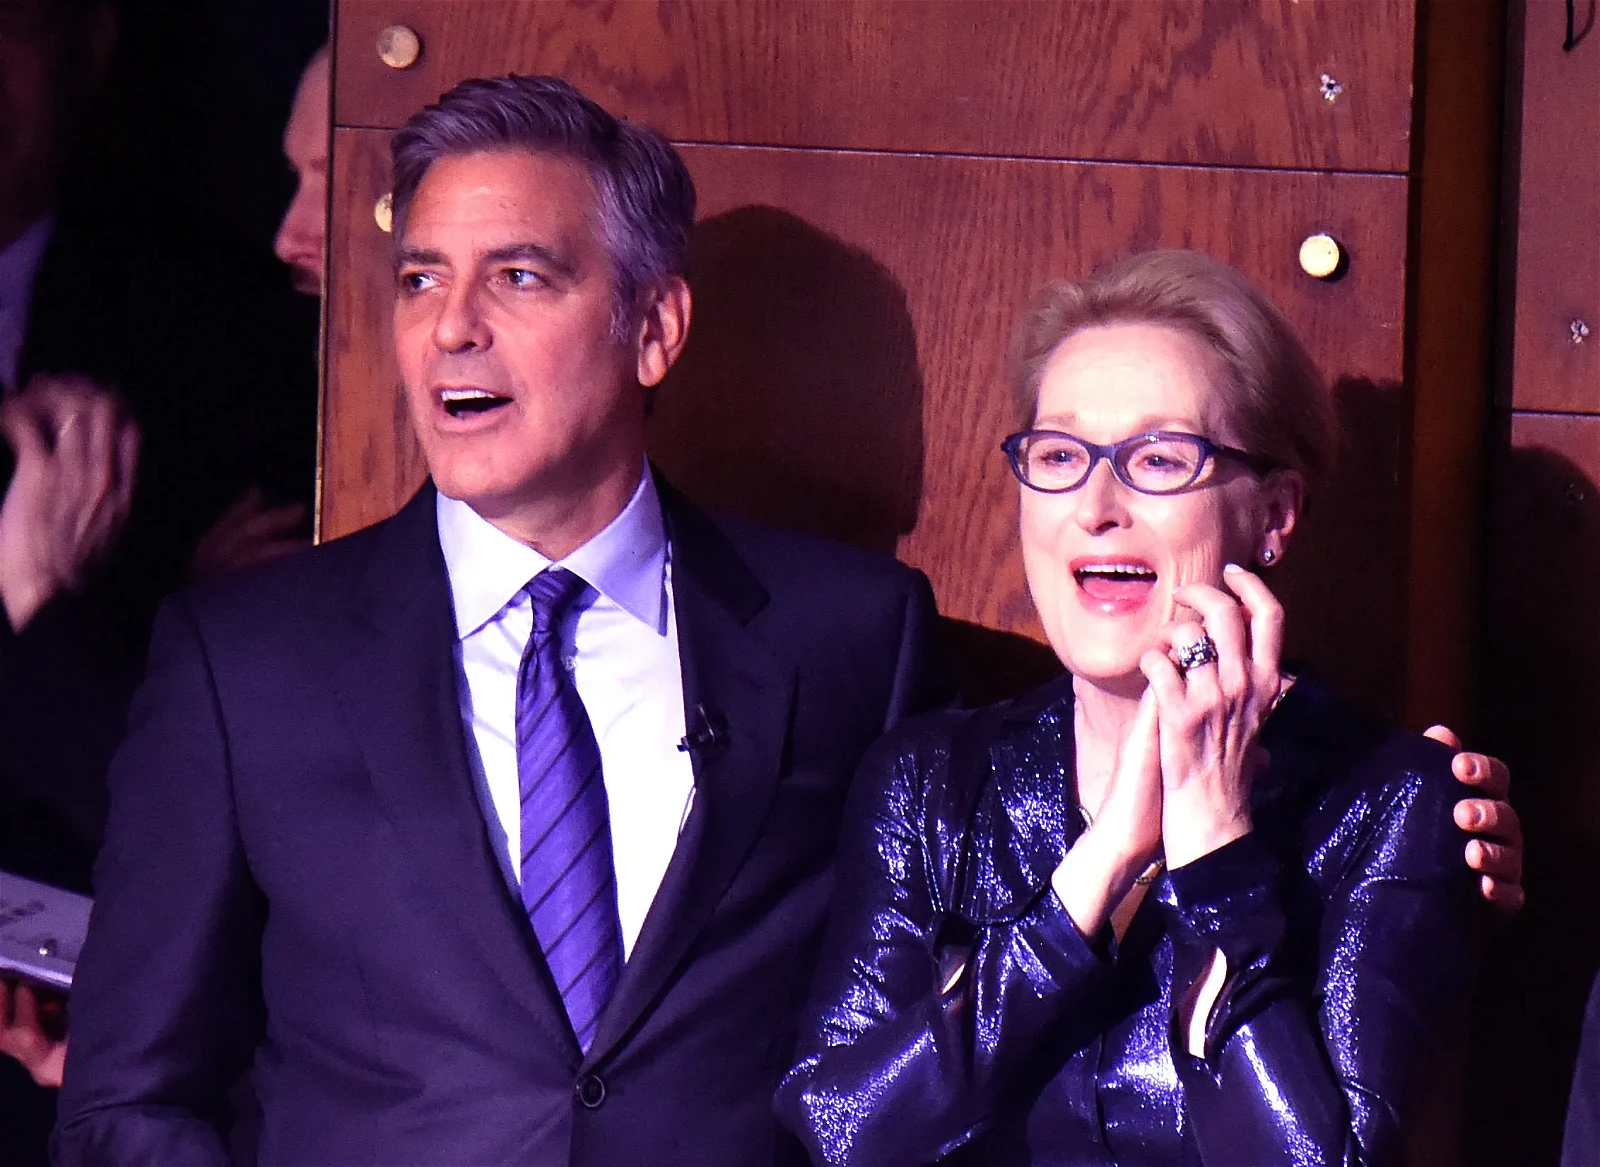 George Clooney and Meryl Streep